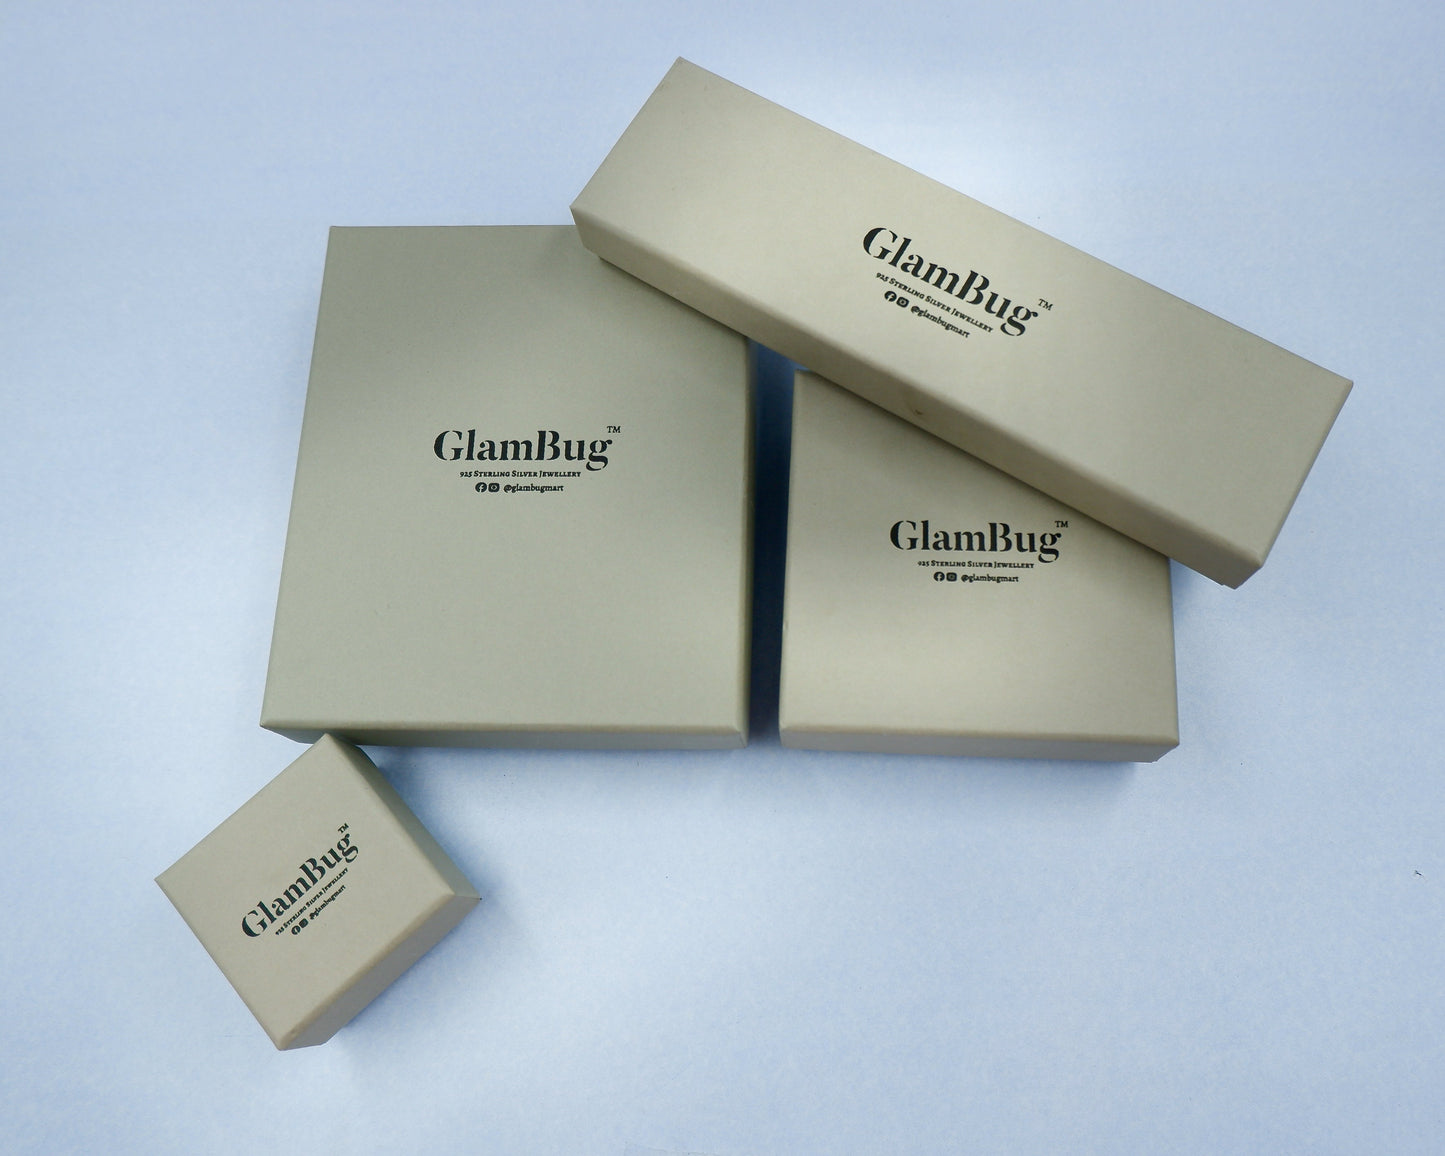 GlamBug 925 Sterling Silver | Luxury Premium Earrings | Swiss Zircon Studded | GBRPZE02-48 - Glambug 925 Silver Jewellery